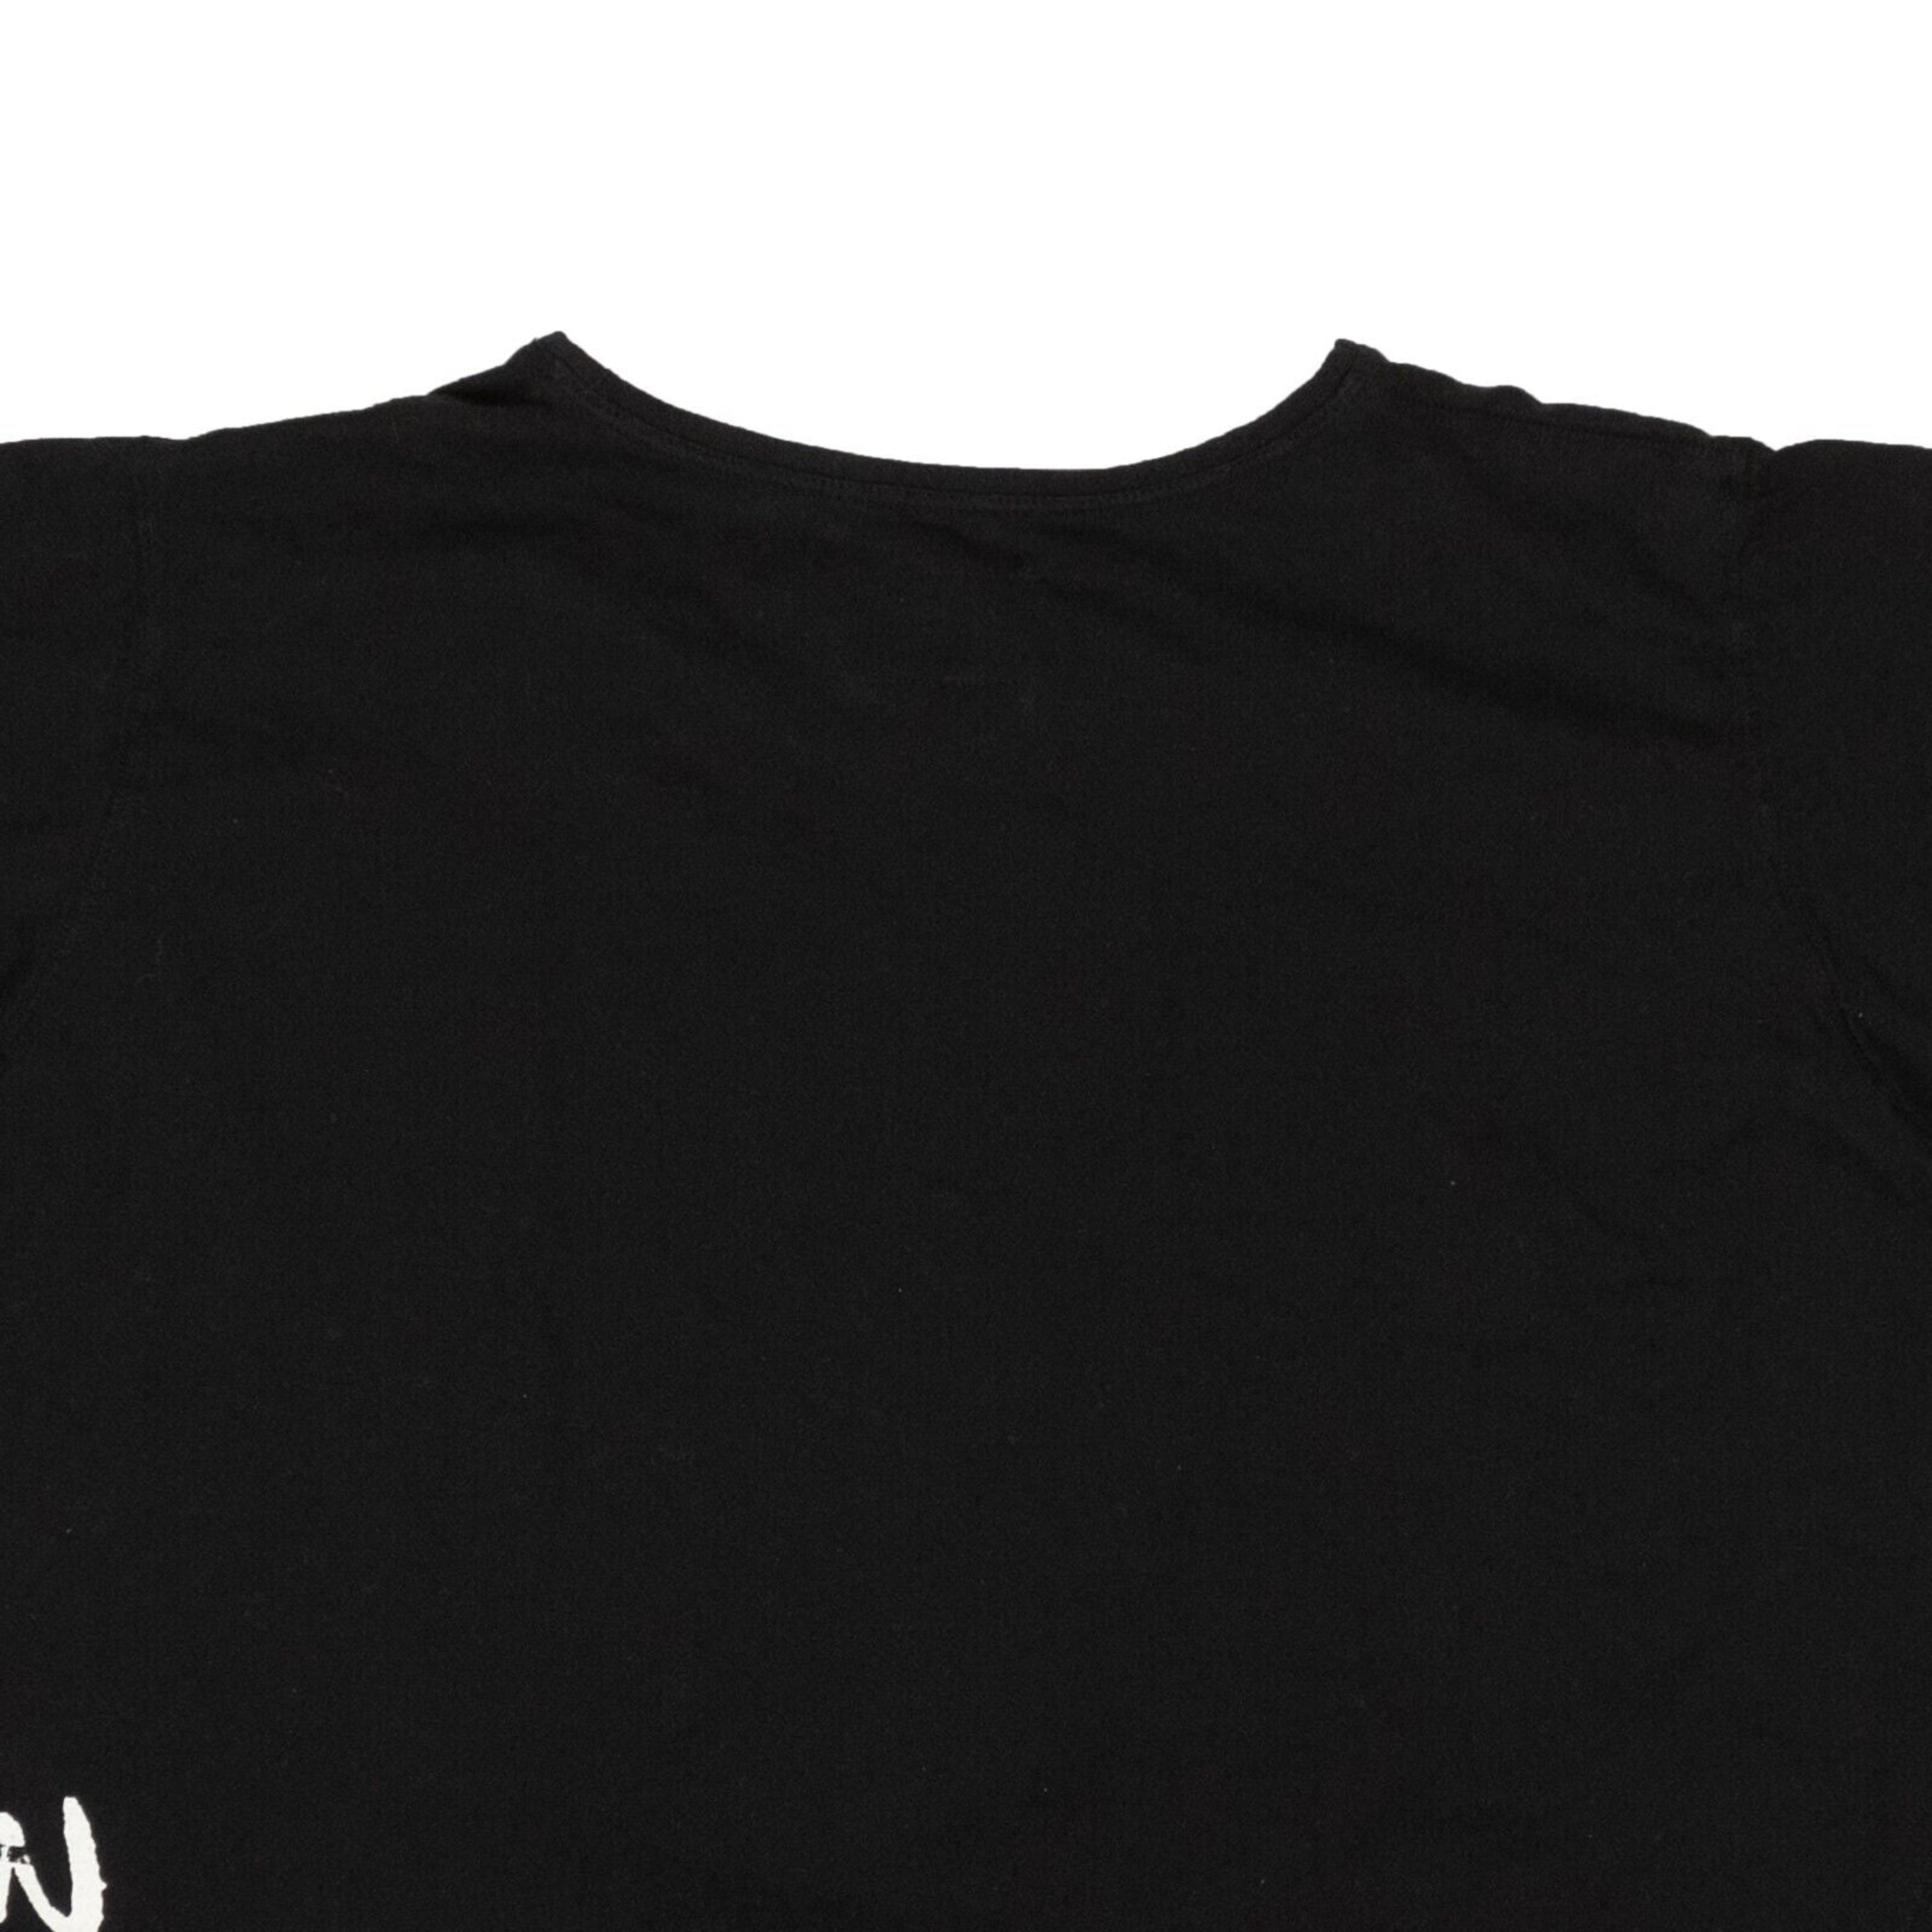 Alternate View 3 of Greg Lauren Deconstructed T-Shirt - Black